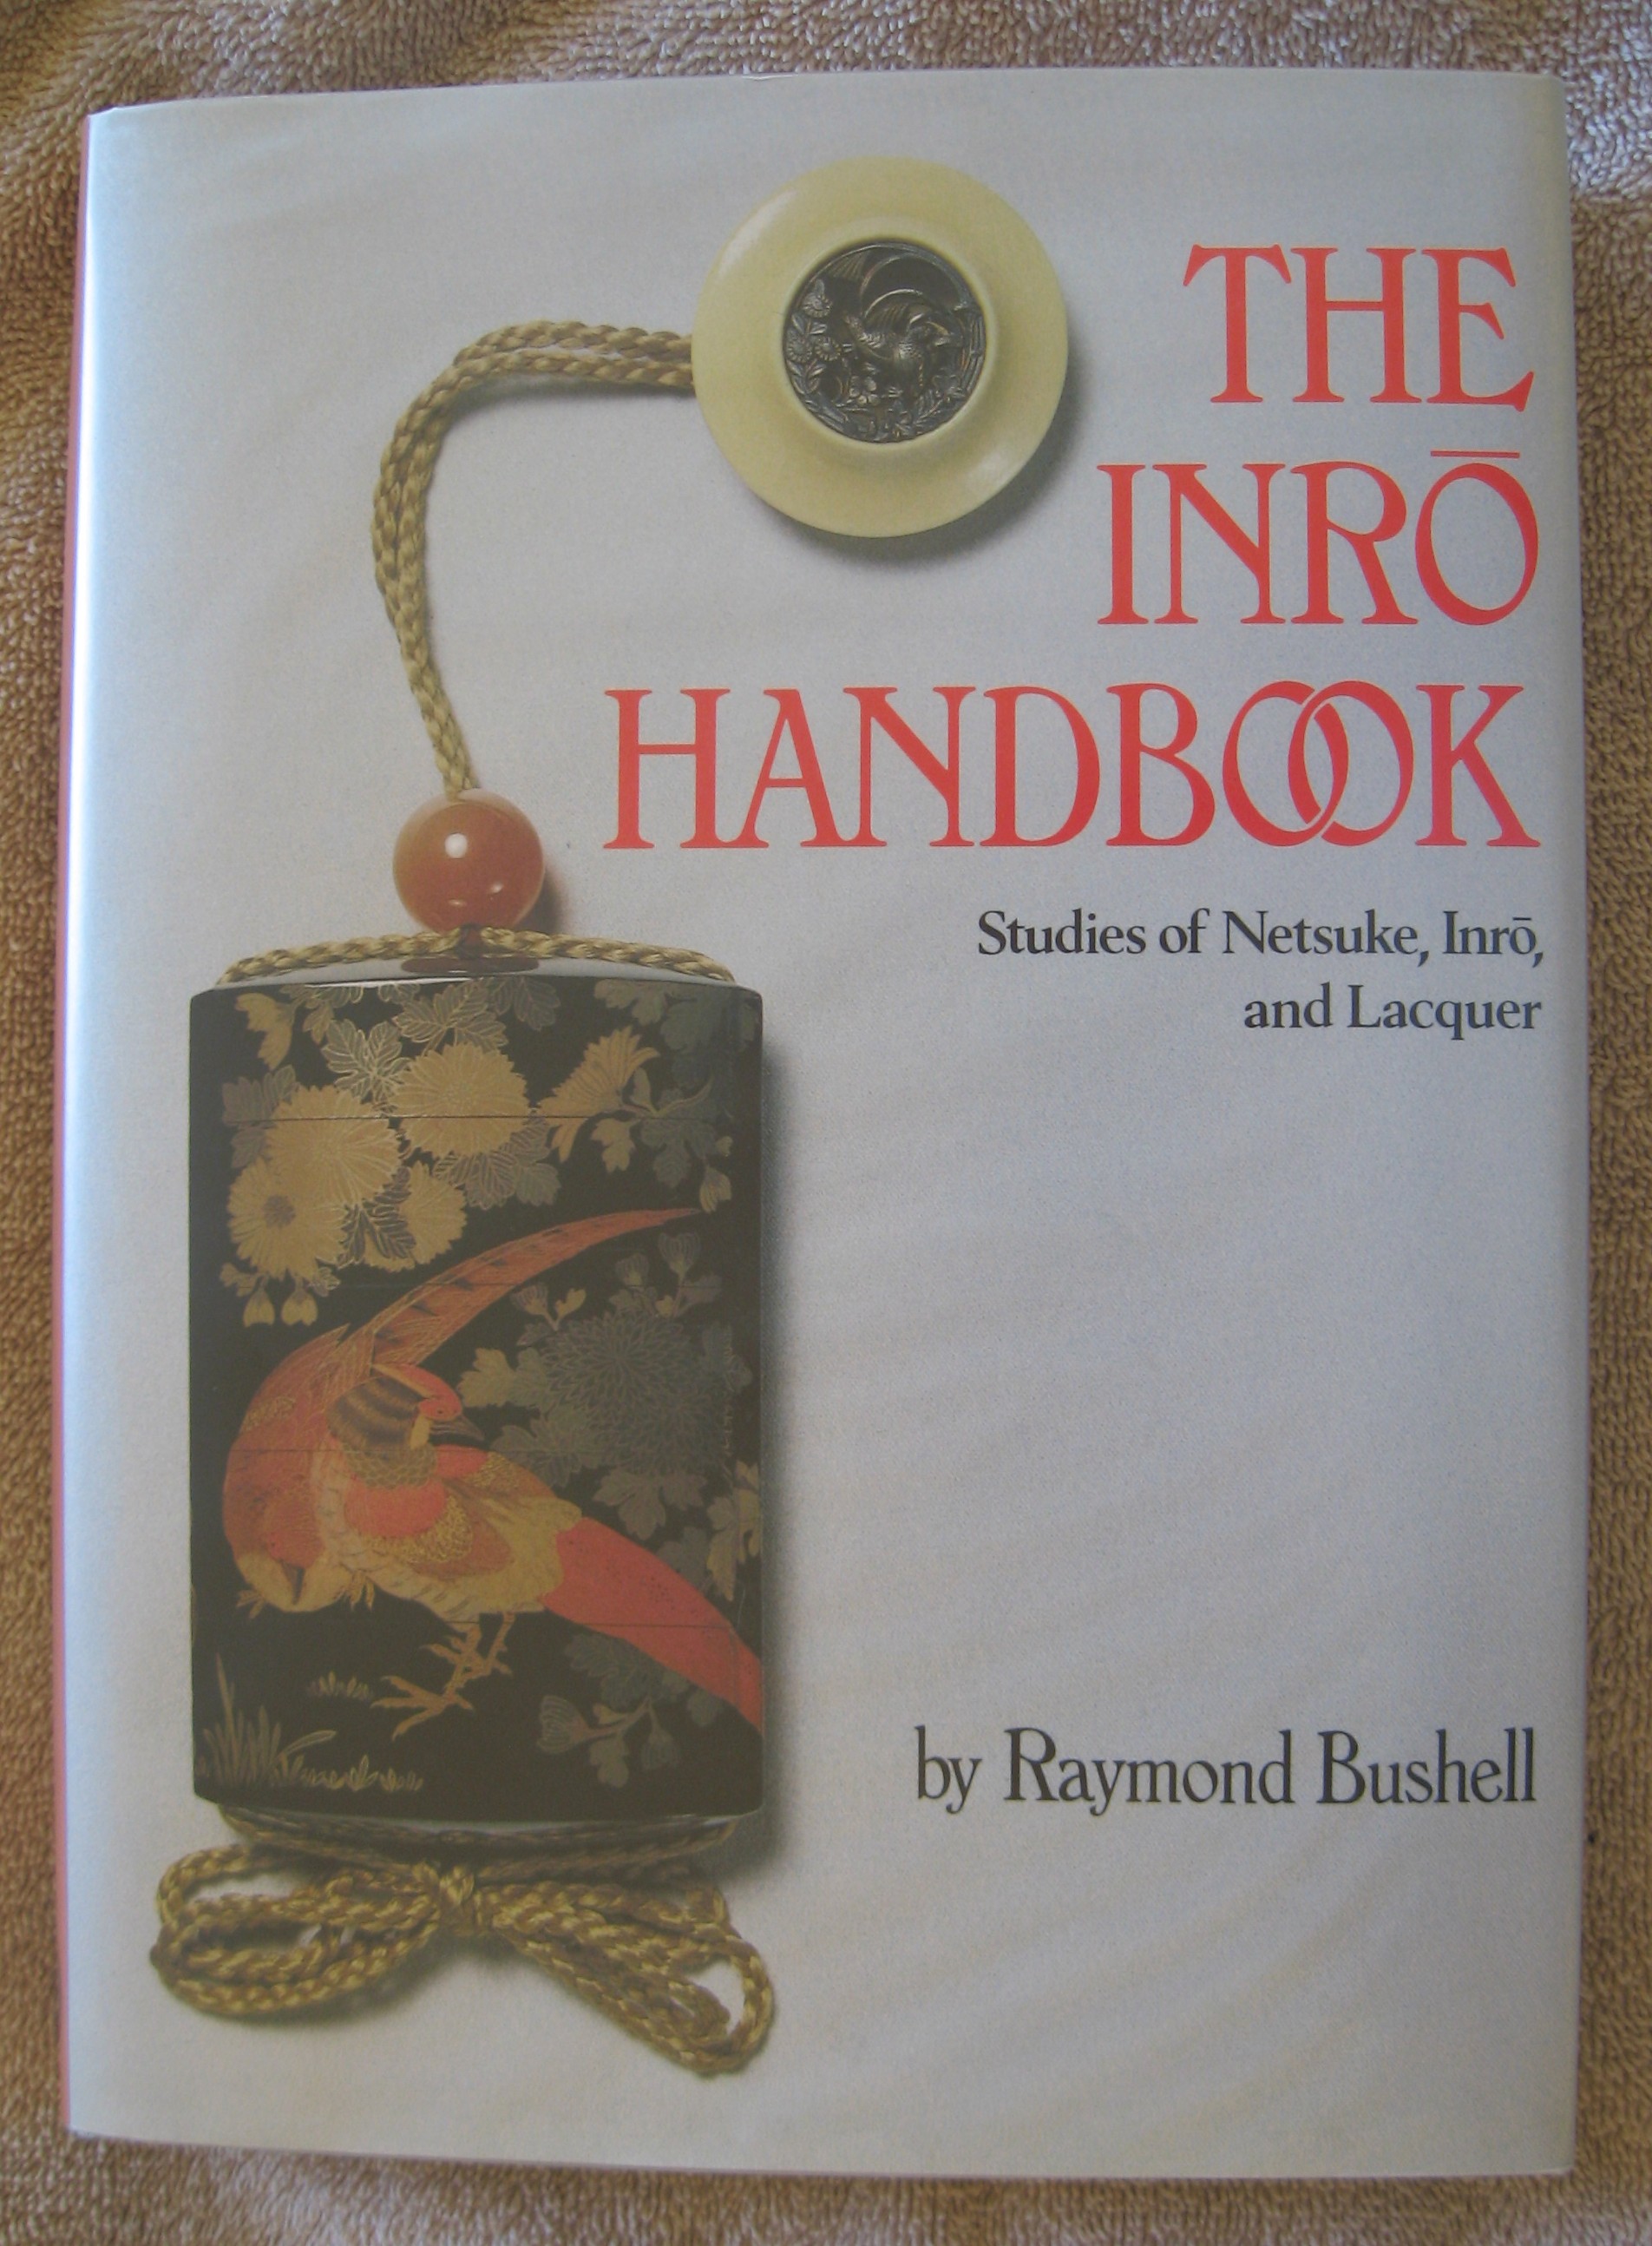 The Inro Handbook